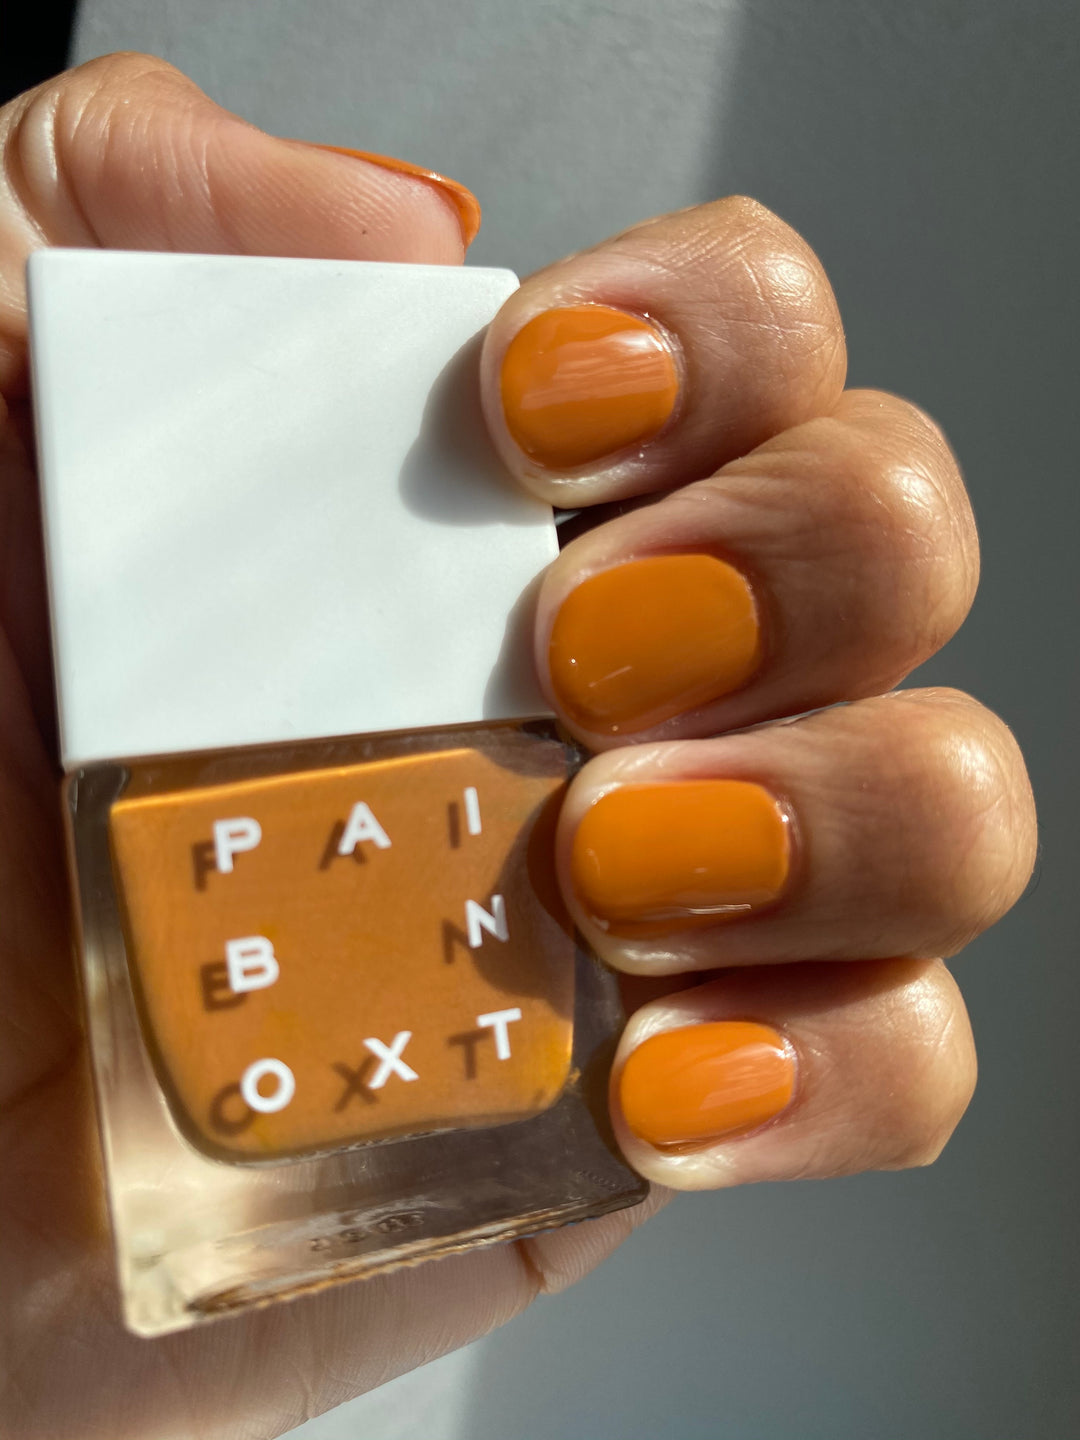 The Paint Box – Paintbox